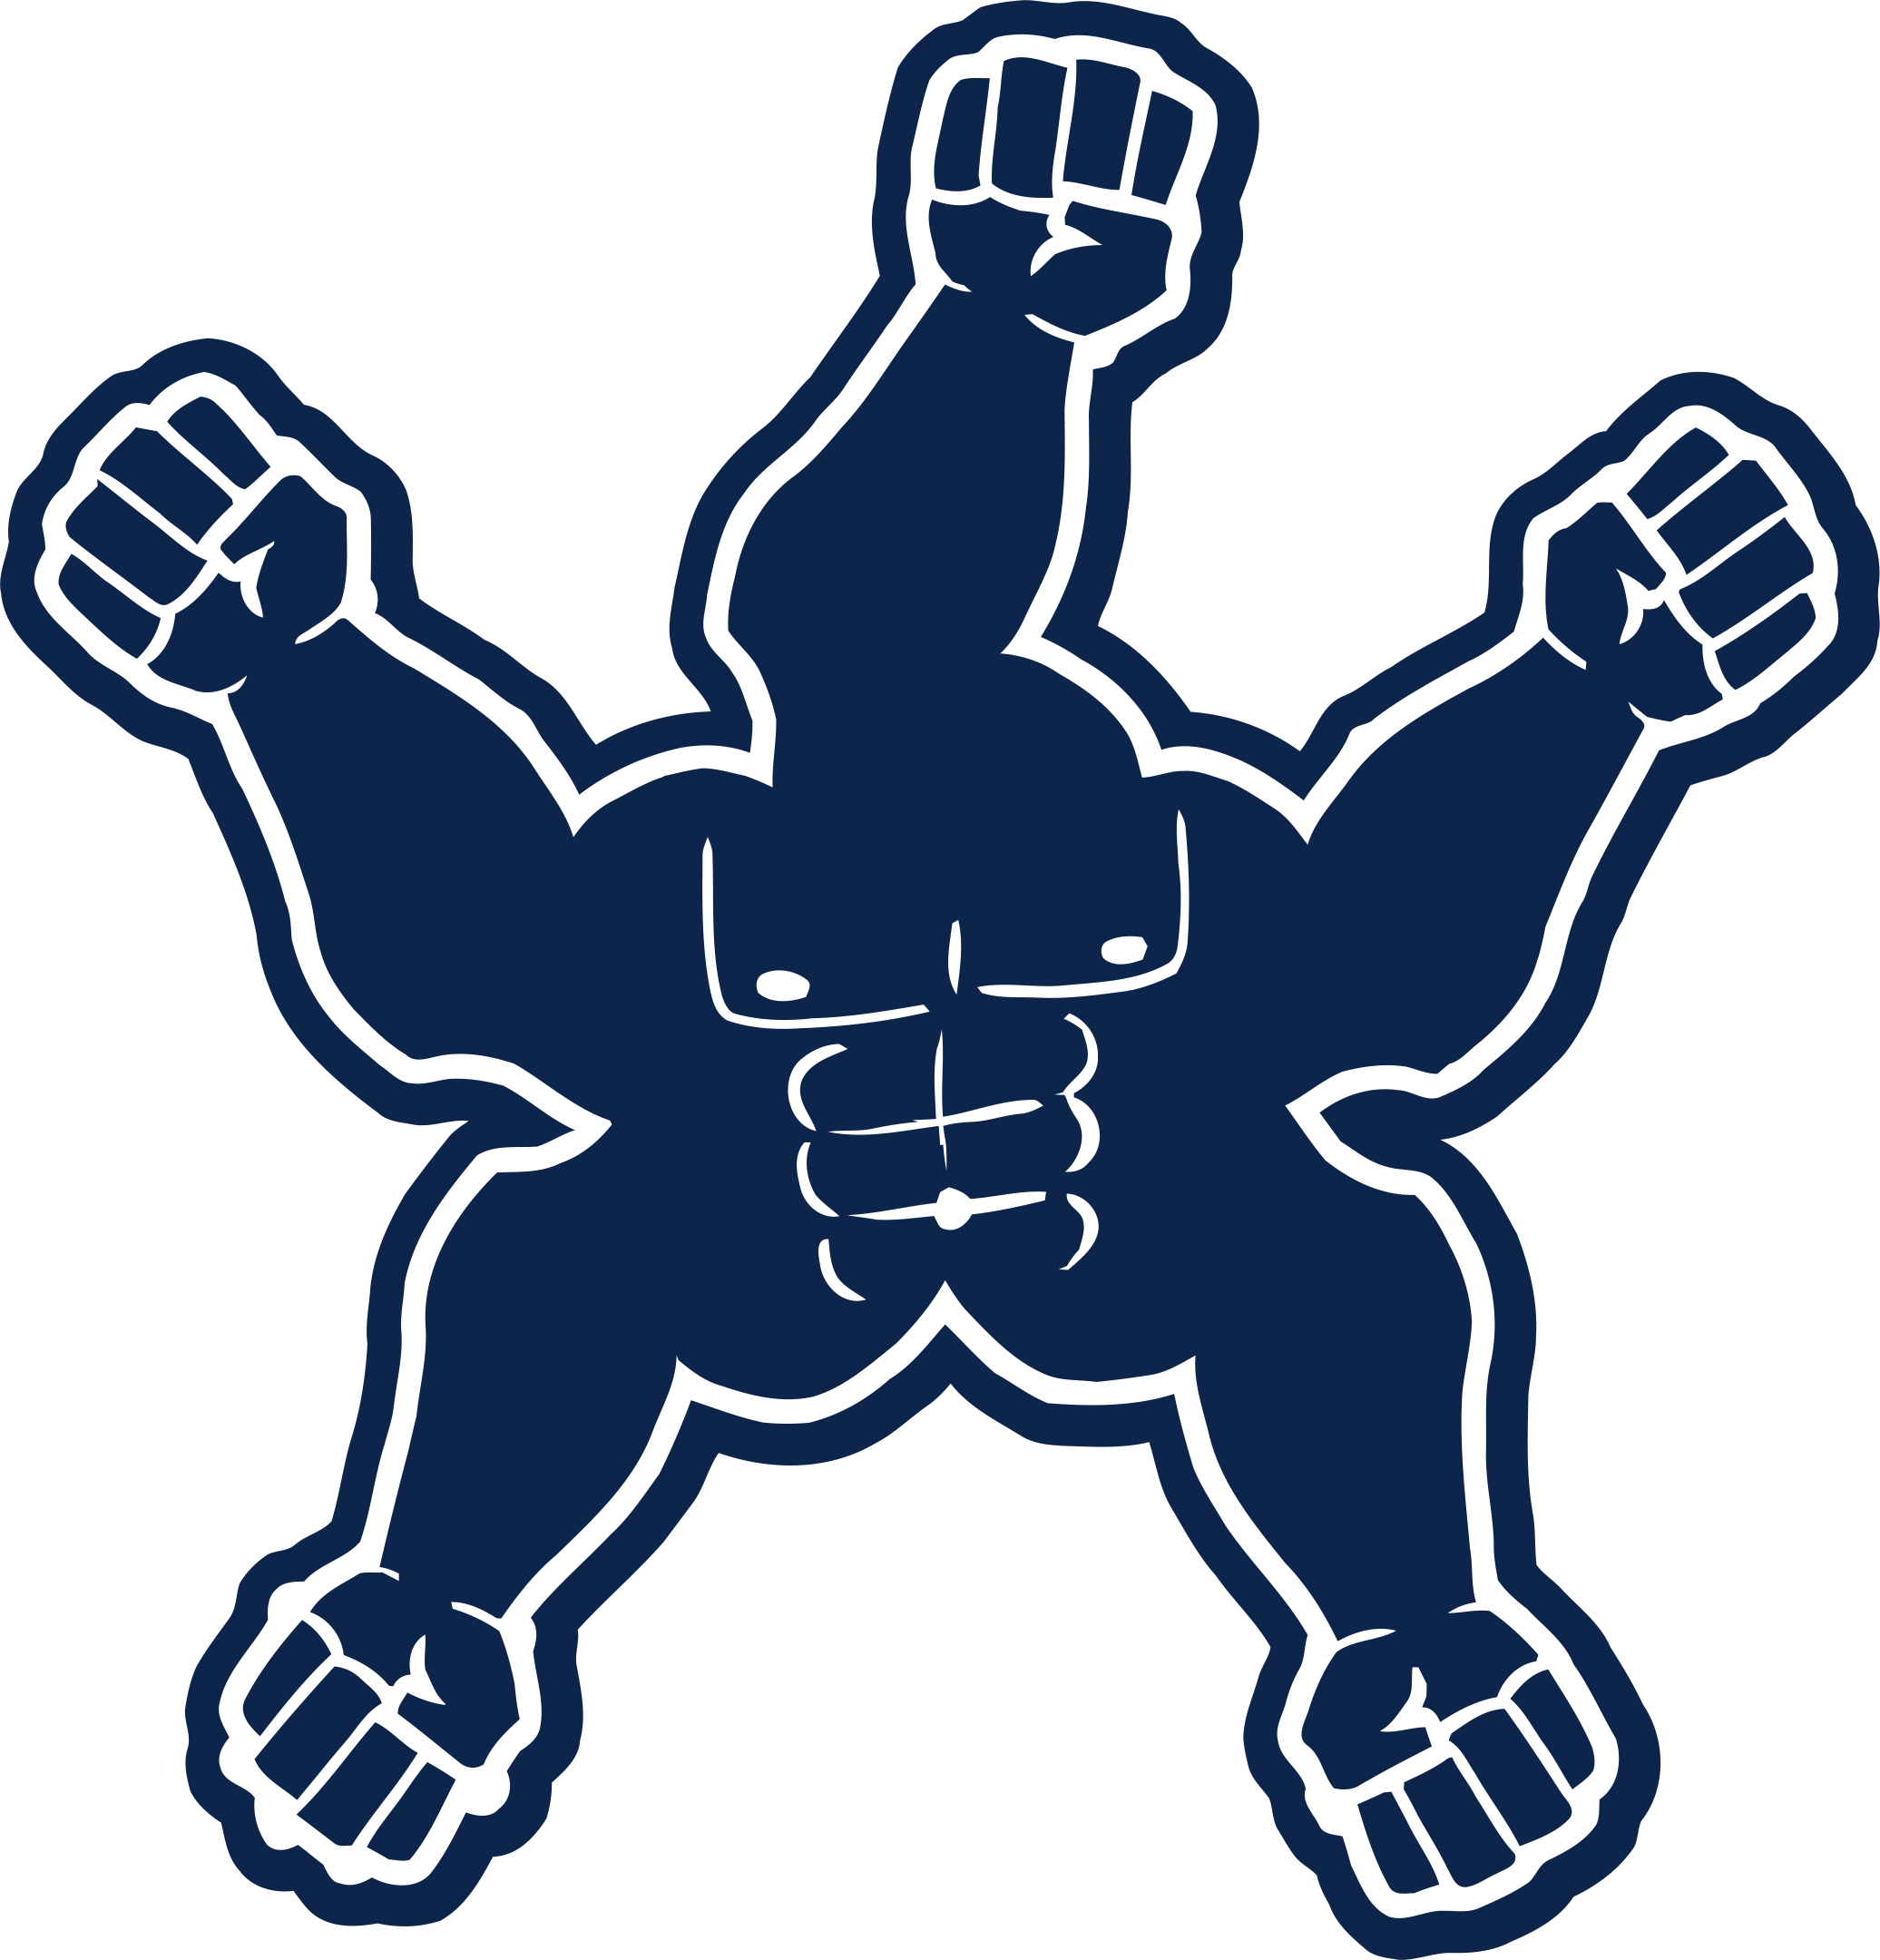 Dallas Cowboys Steroids Logo fabric transfer